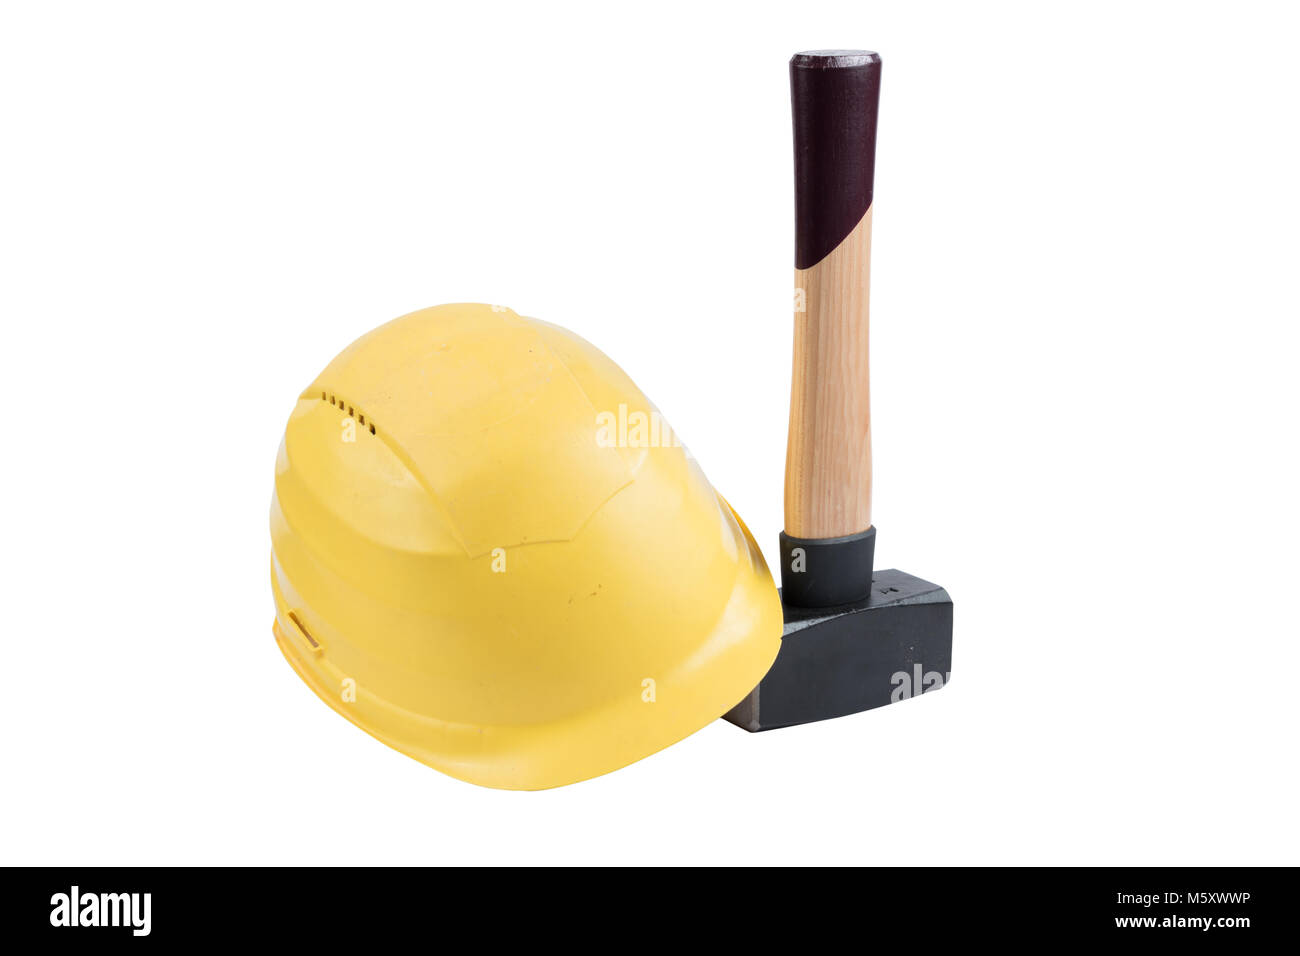 Yellow Construction Hard Hat protection flashlight off Stock Photo - Alamy